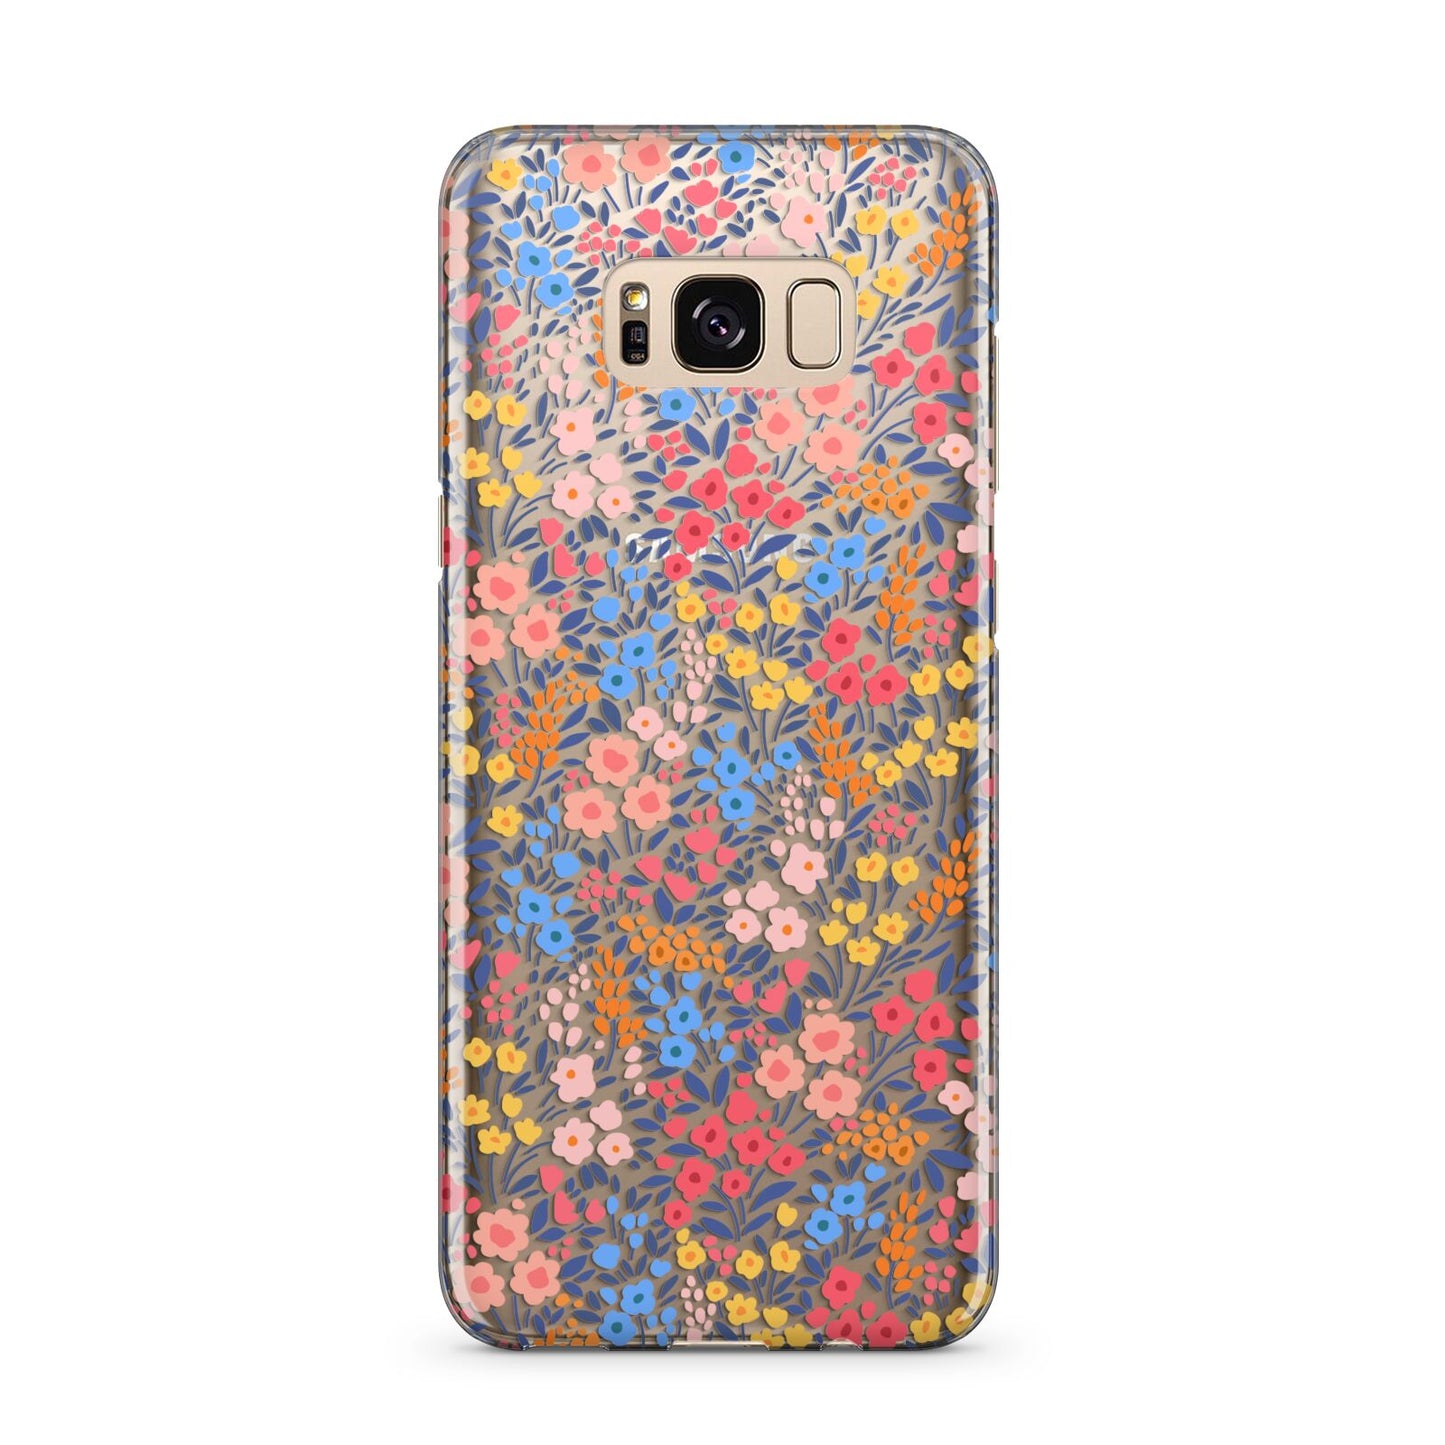 Small Flowers Samsung Galaxy S8 Plus Case